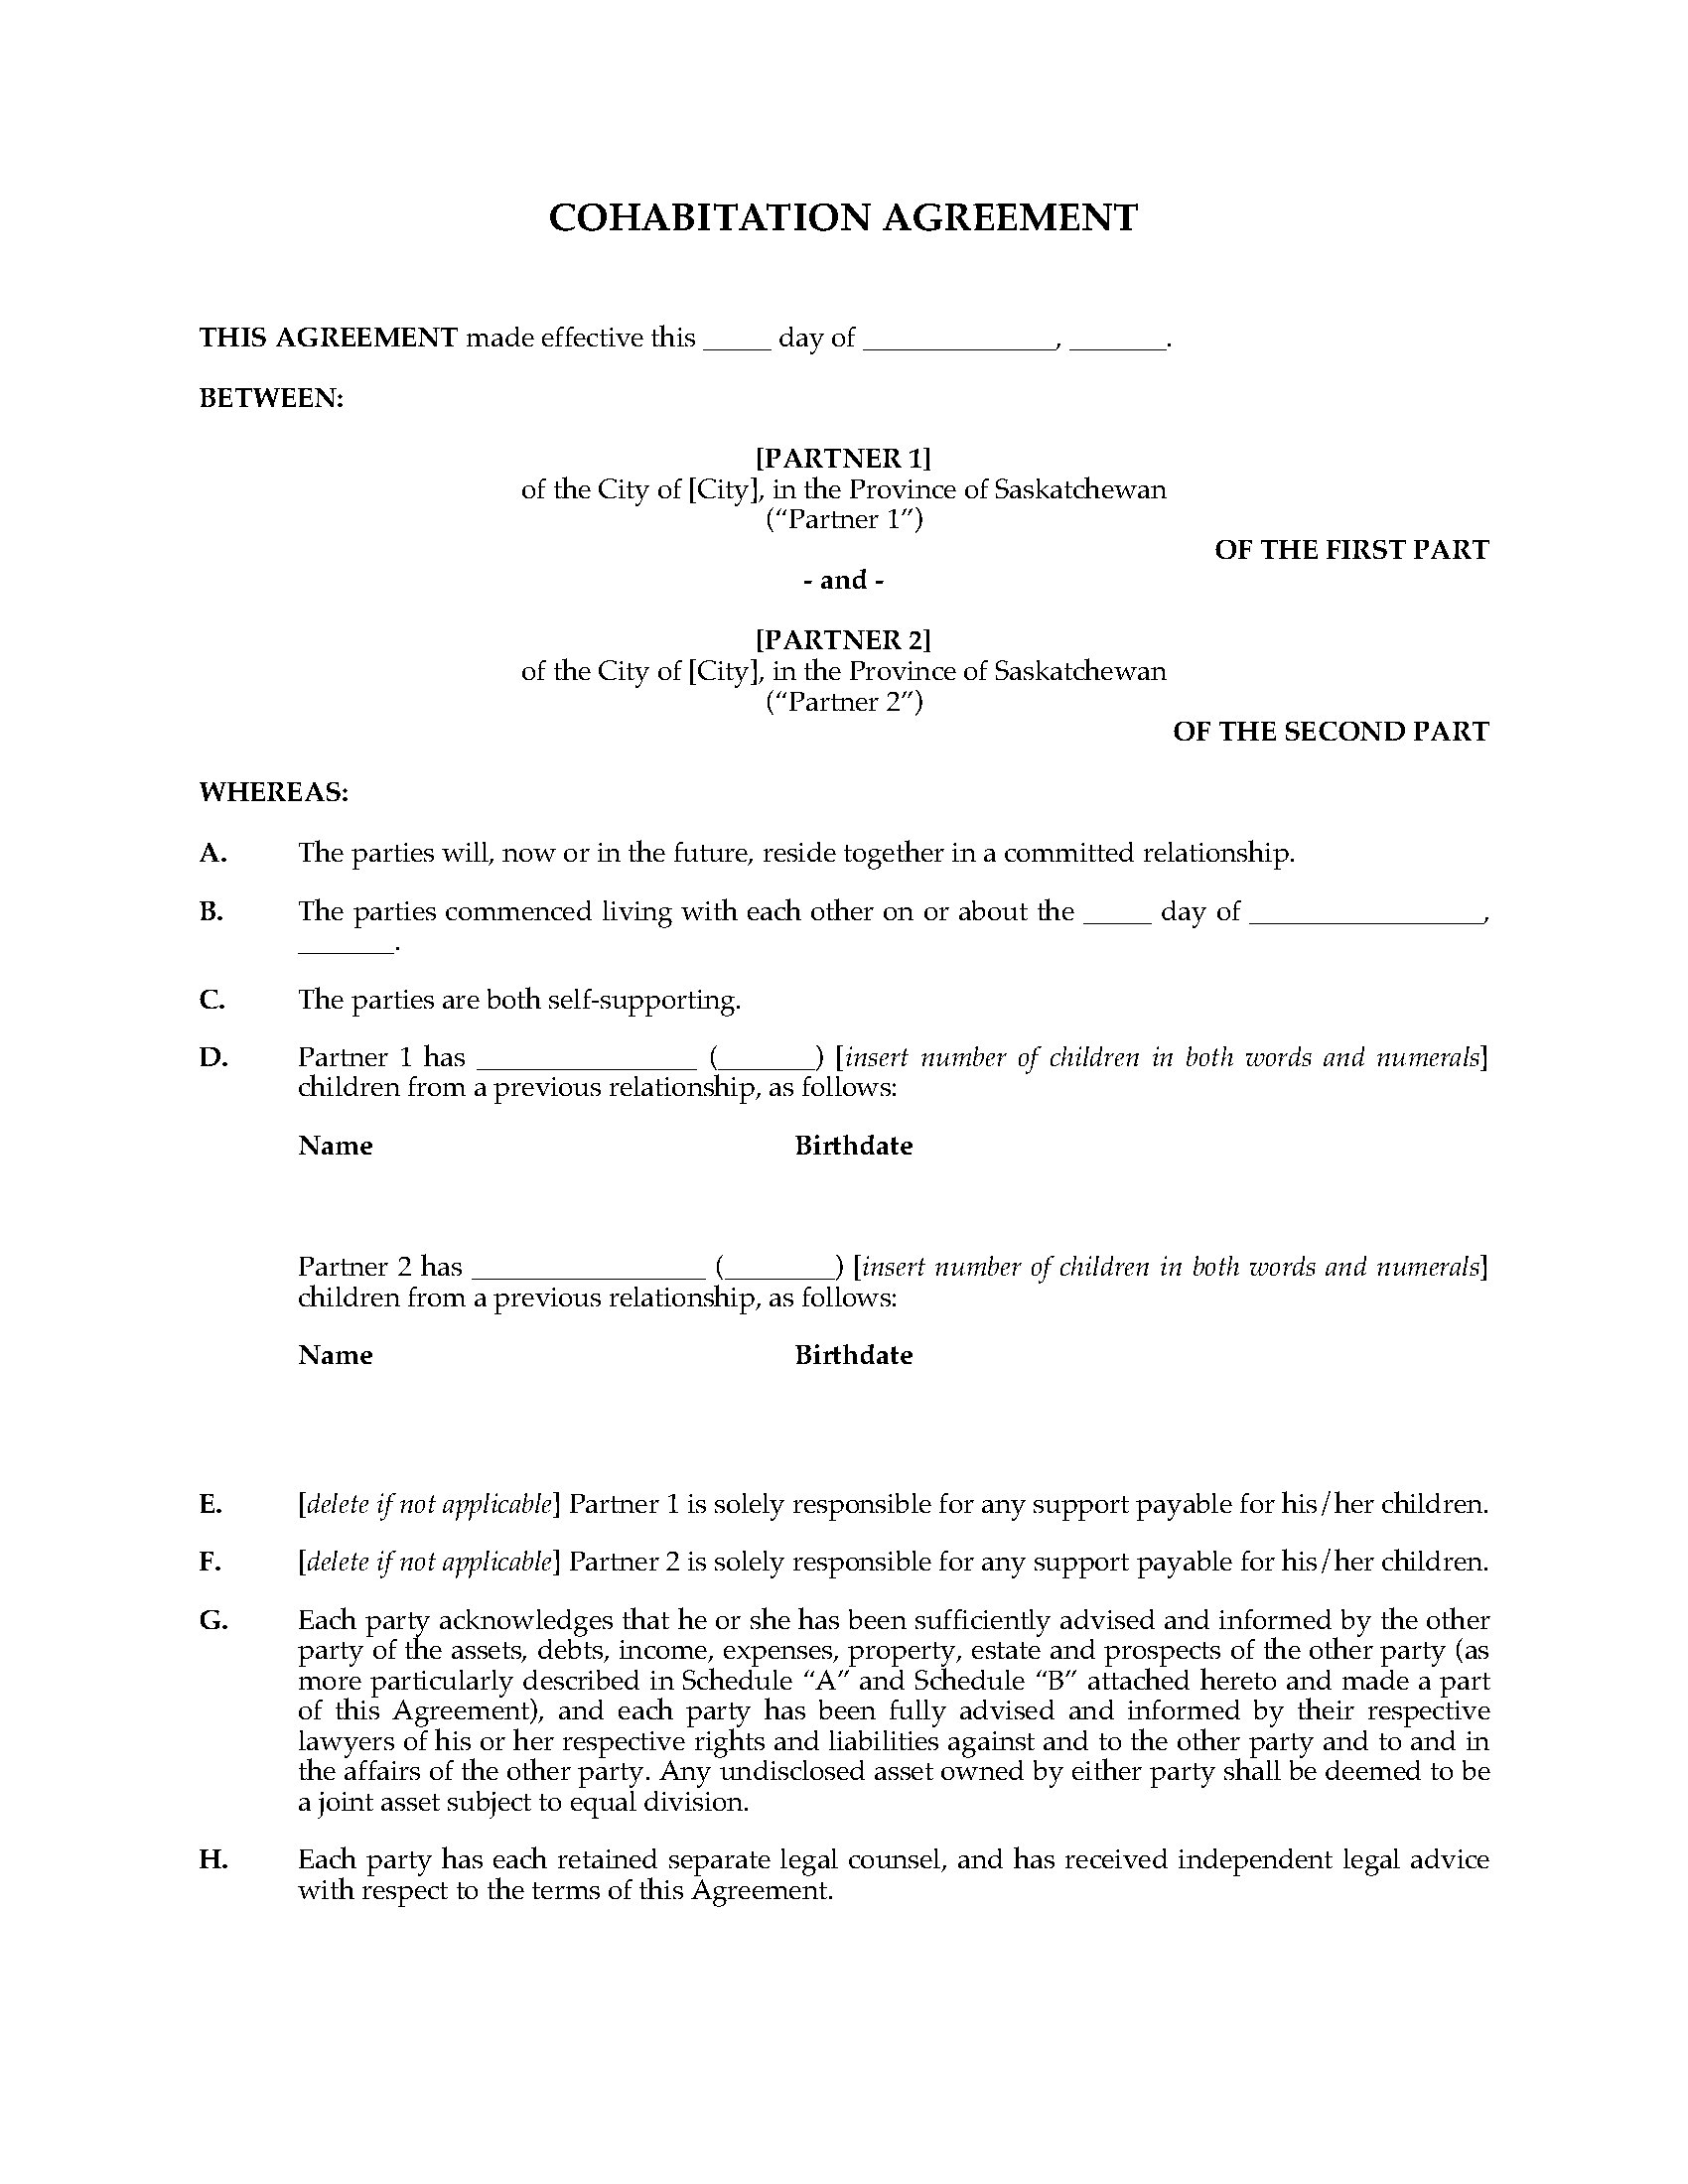 saskatchewan-cohabitation-agreement-legal-forms-and-business